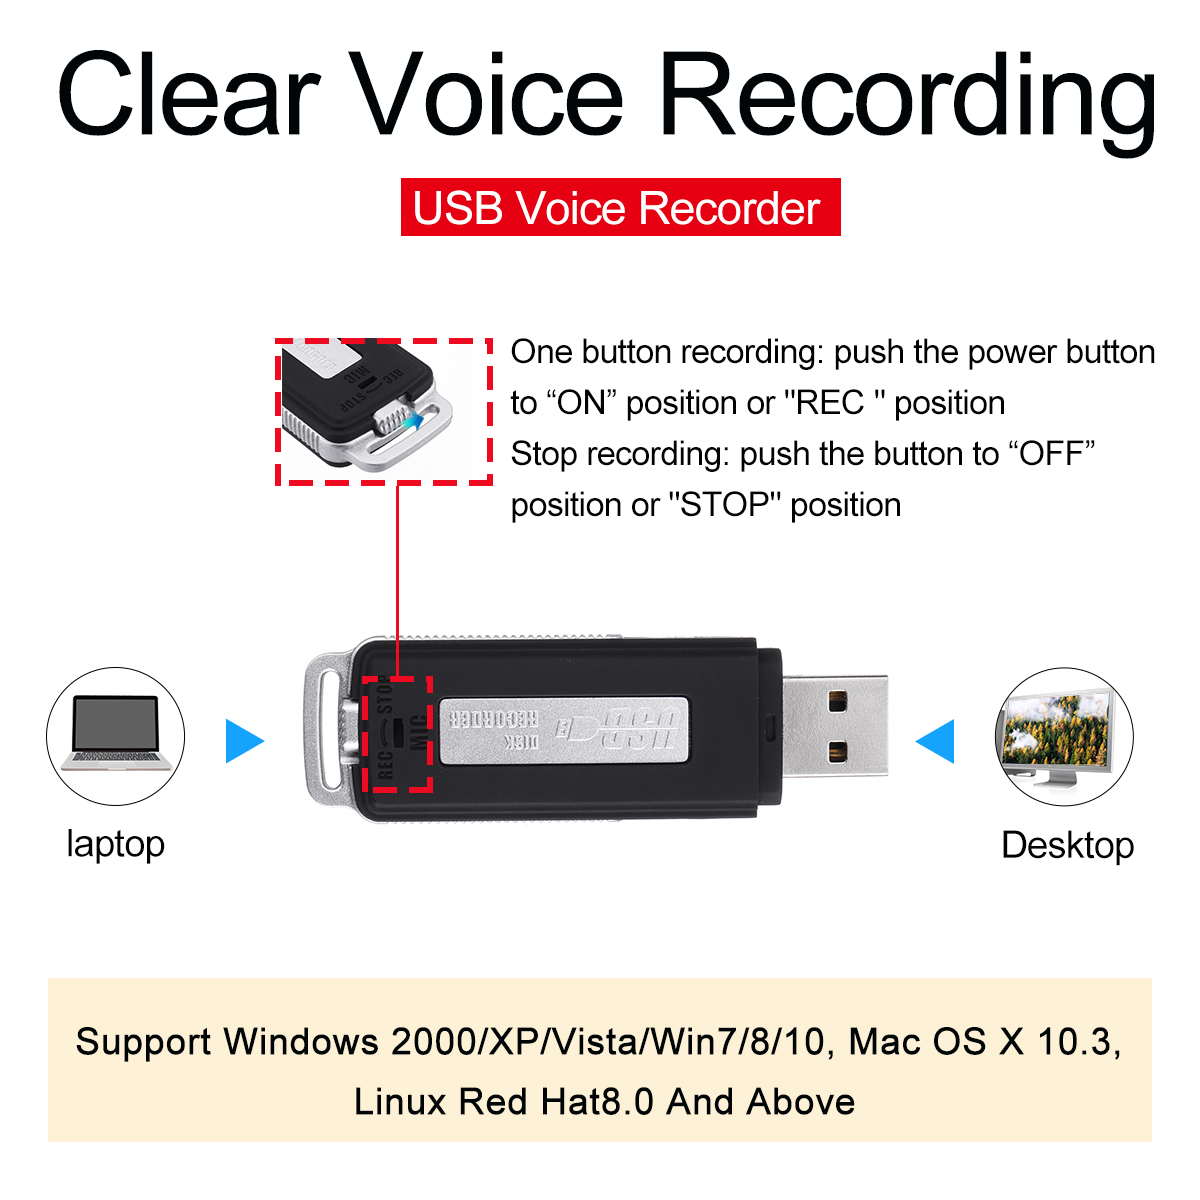 8GB-16GB-Voice-Recorder-USB-20-Flash-Drive-U-Disk-For-Laptop-Notebook-Desktop-PC-1492825